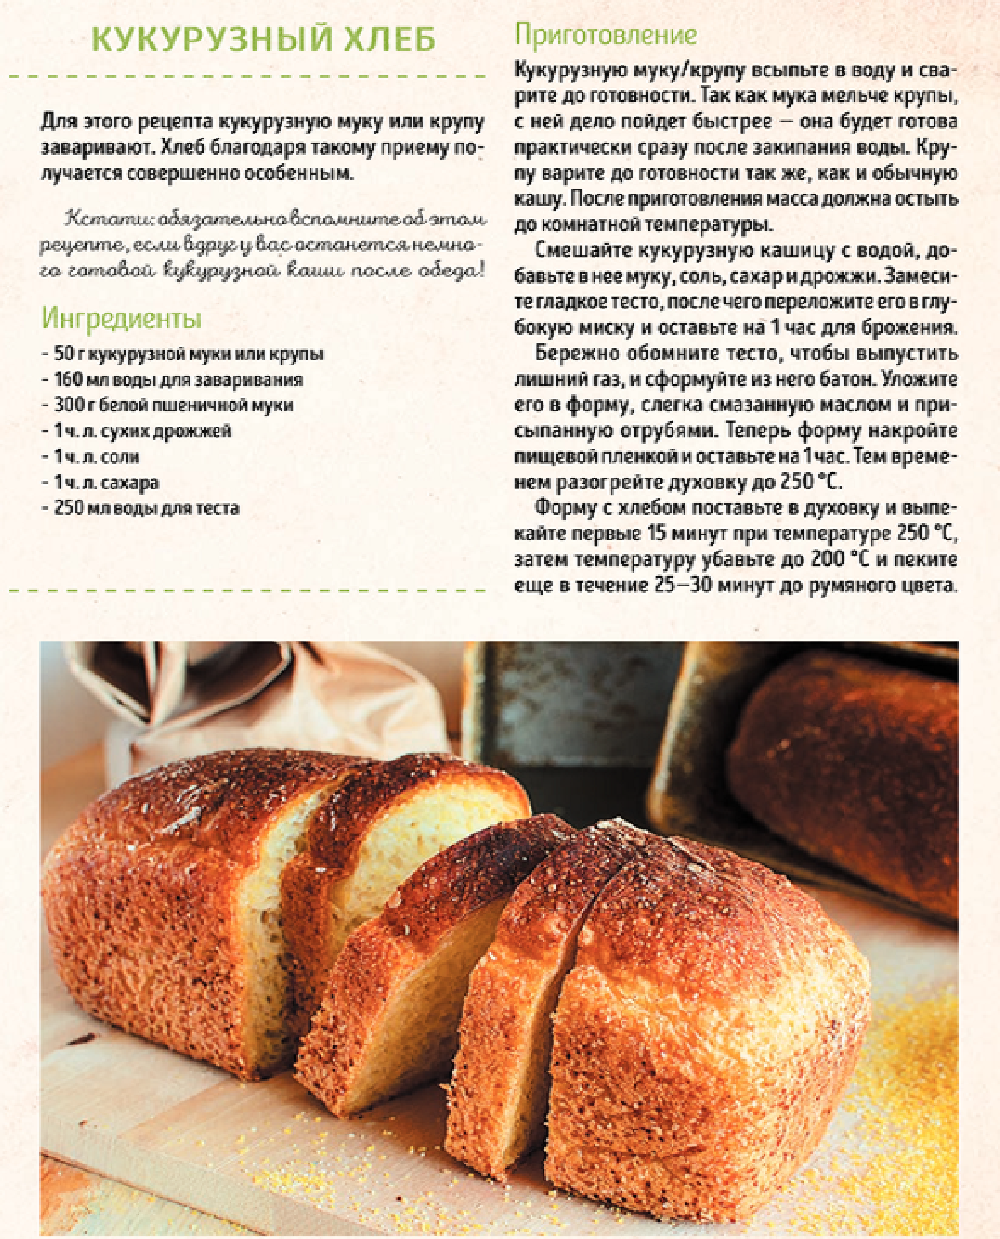 Рецепт хлеба. Рецепт хлебобулочных изделий. Рецептура хлеба и хлебобулочных изделий. Рецептура приготовления хлеба. Рецепты без глютена хлебопечка